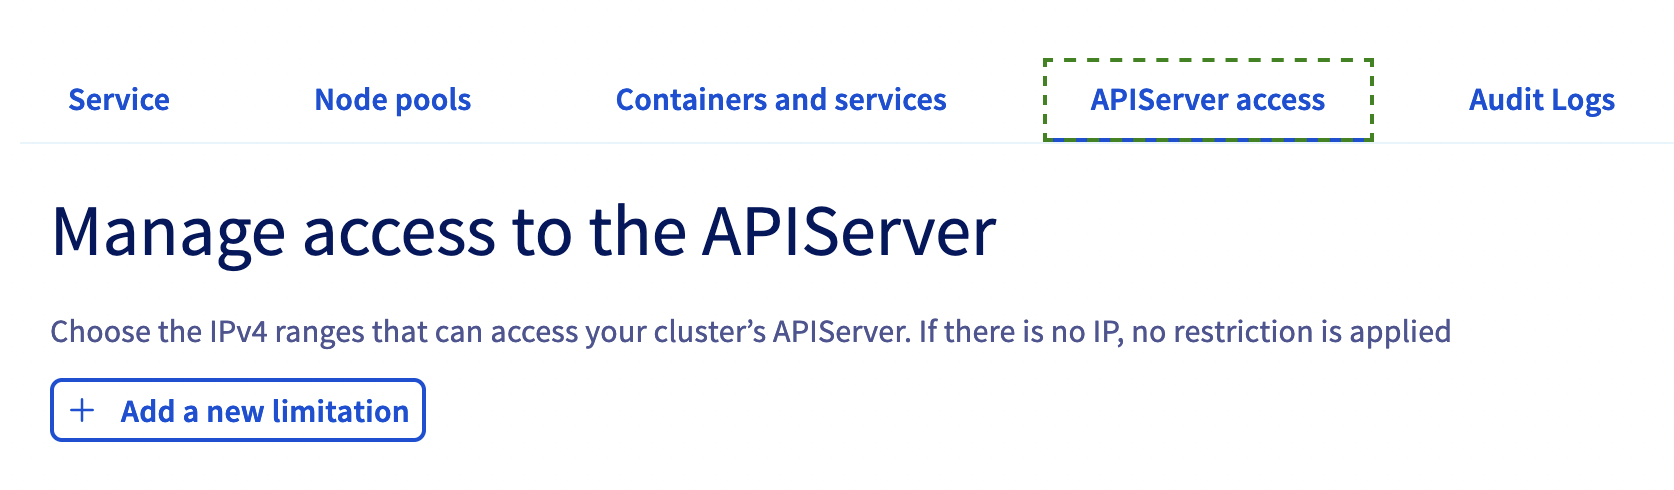 APIServer access